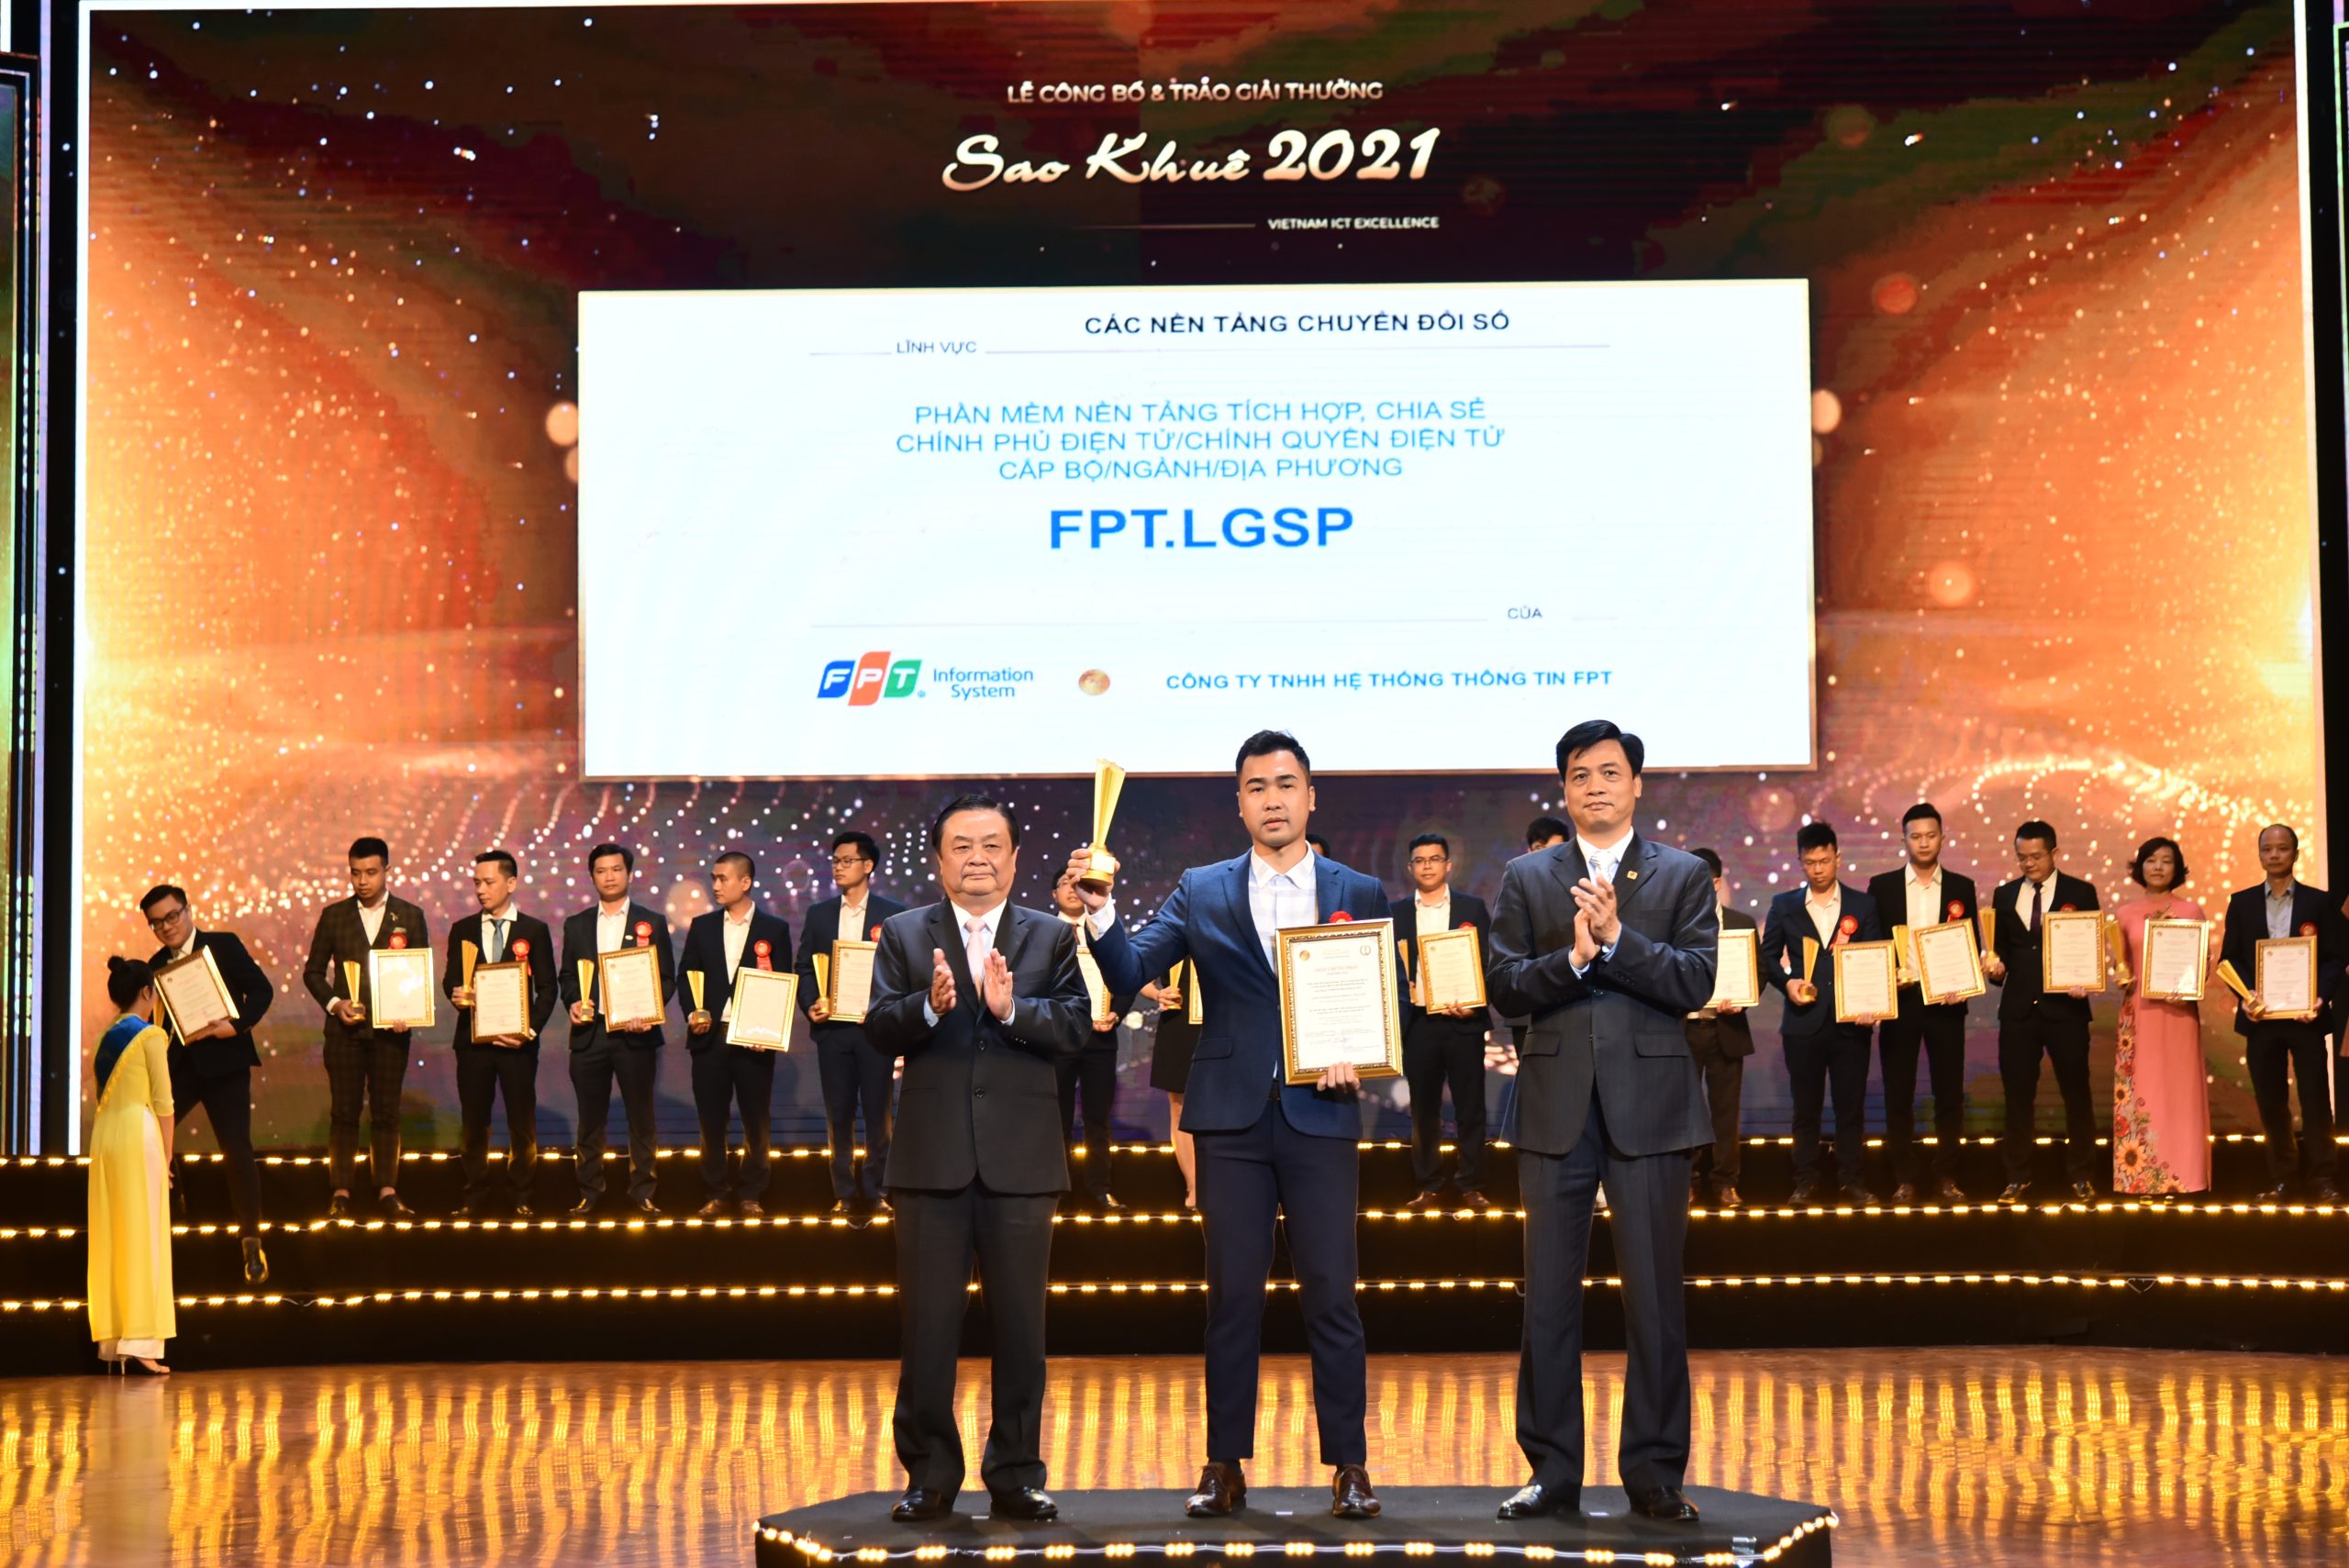 2021 Sao Khue Awards (Vietnam ICT Excellence) – Local Government Service Platform (FPT.LGSP)